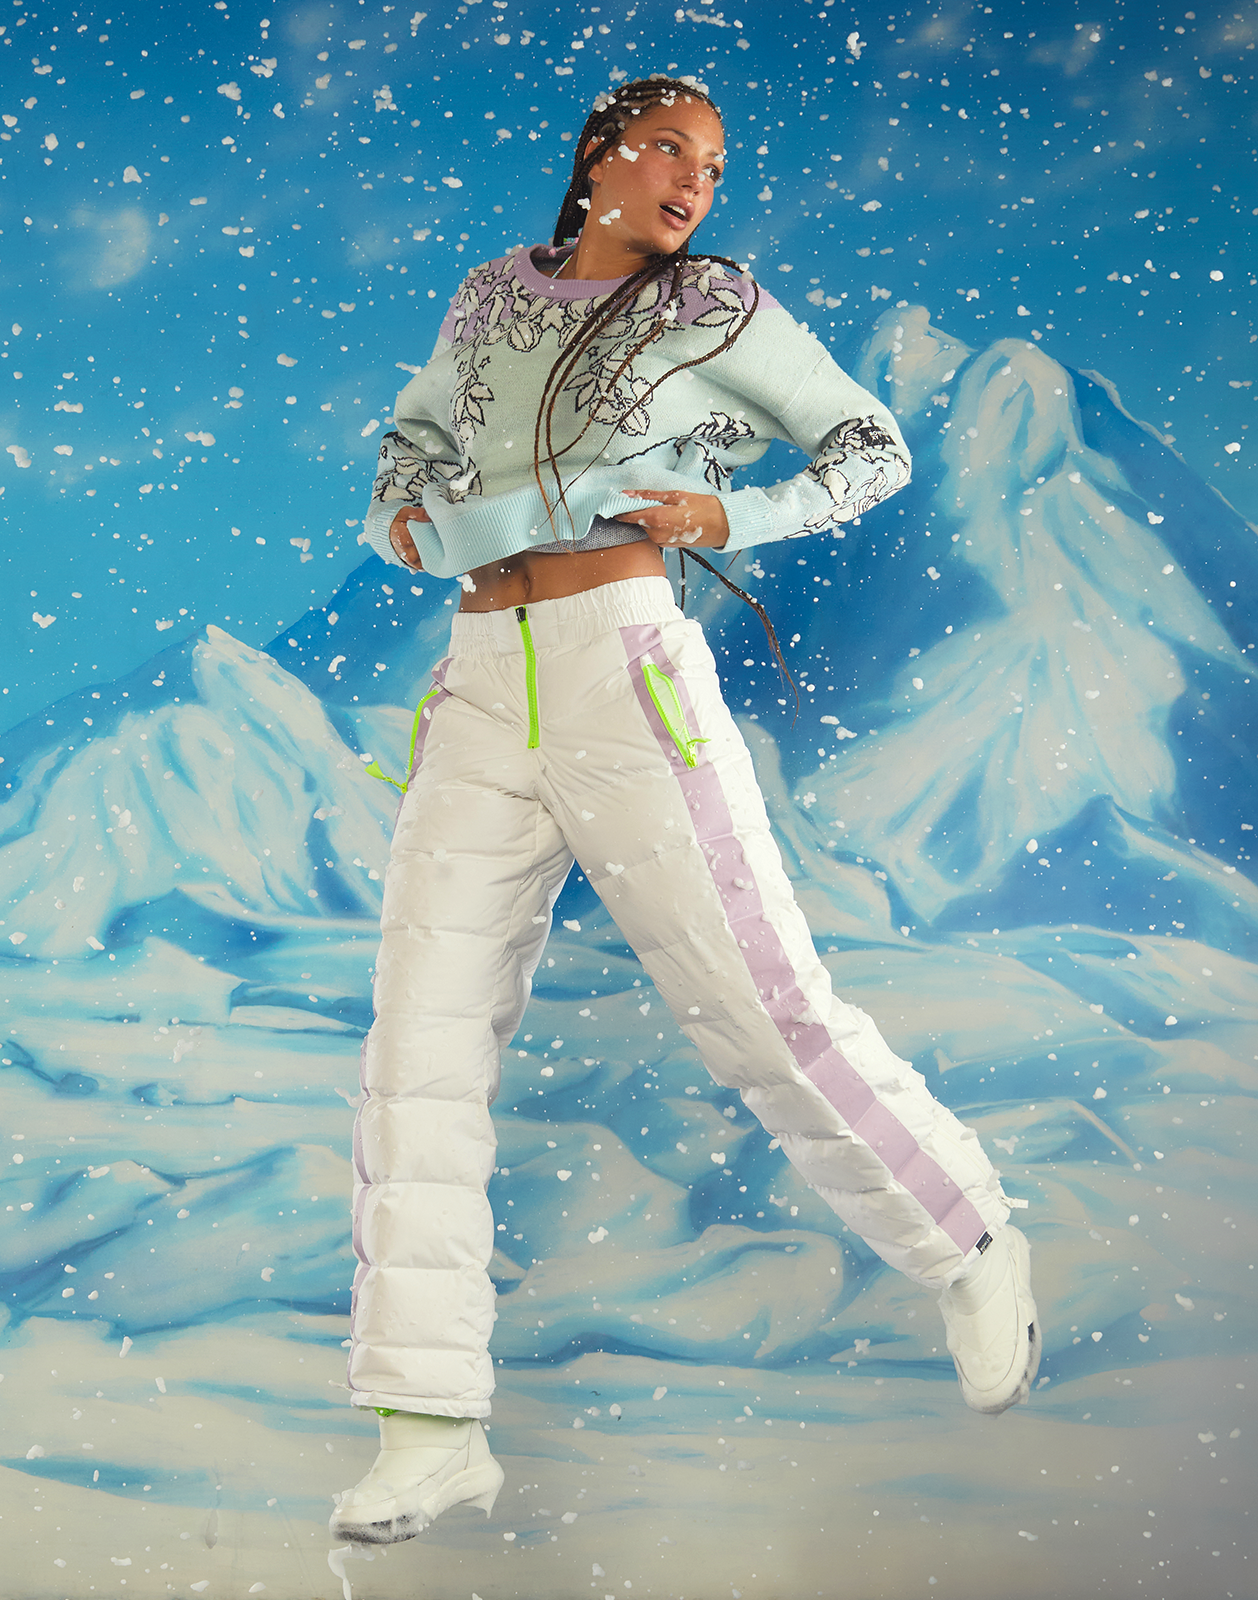 ROWLEY x ROXY Fuseau - Technical Snow Pants for Women